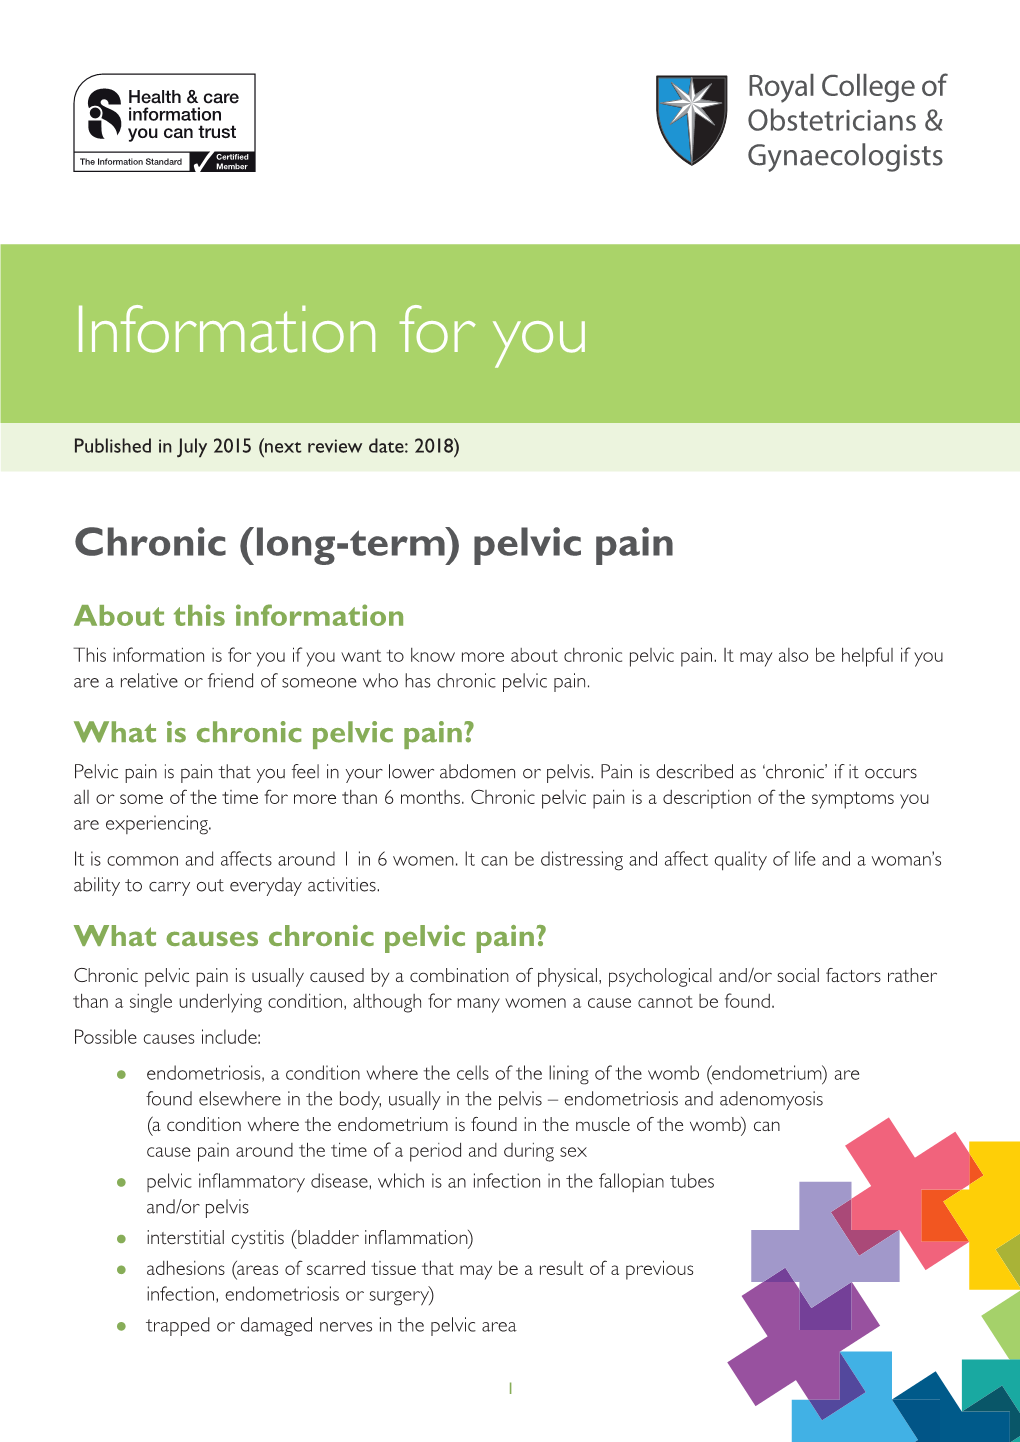 Chronic (Long-Term) Pelvic Pain